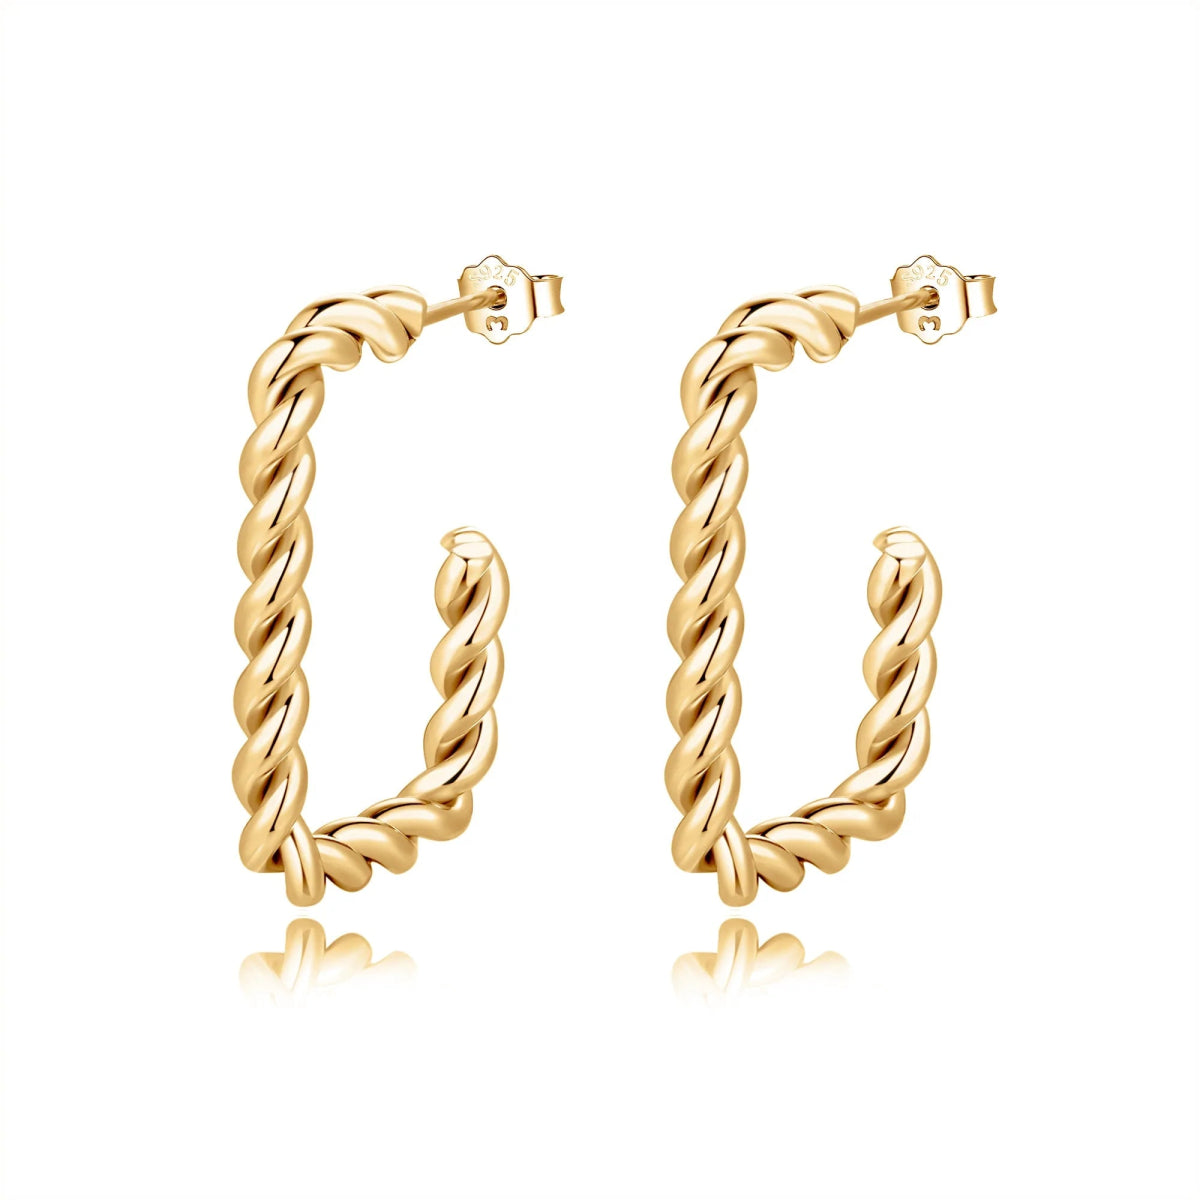 "Twisted Braid" Earrings - Milas Jewels Shop